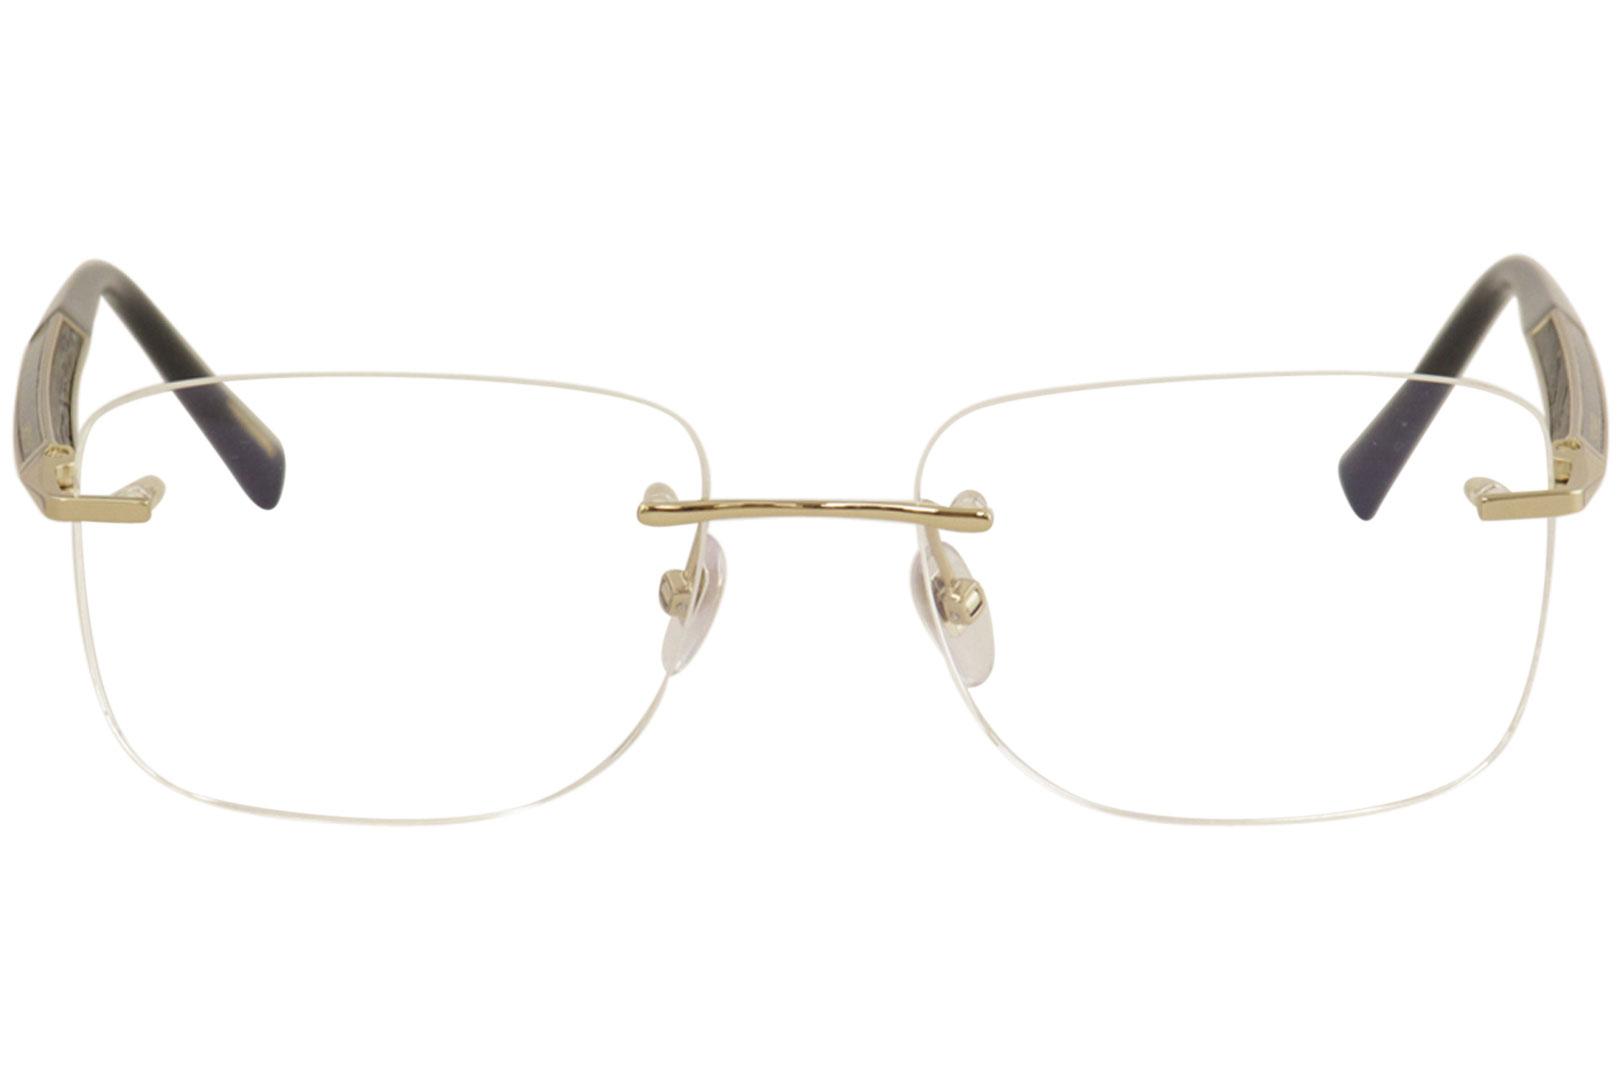 Chopard Men's Eyeglasses VCHC74 VCHC/74 0579 Silver Rimless Optical ...